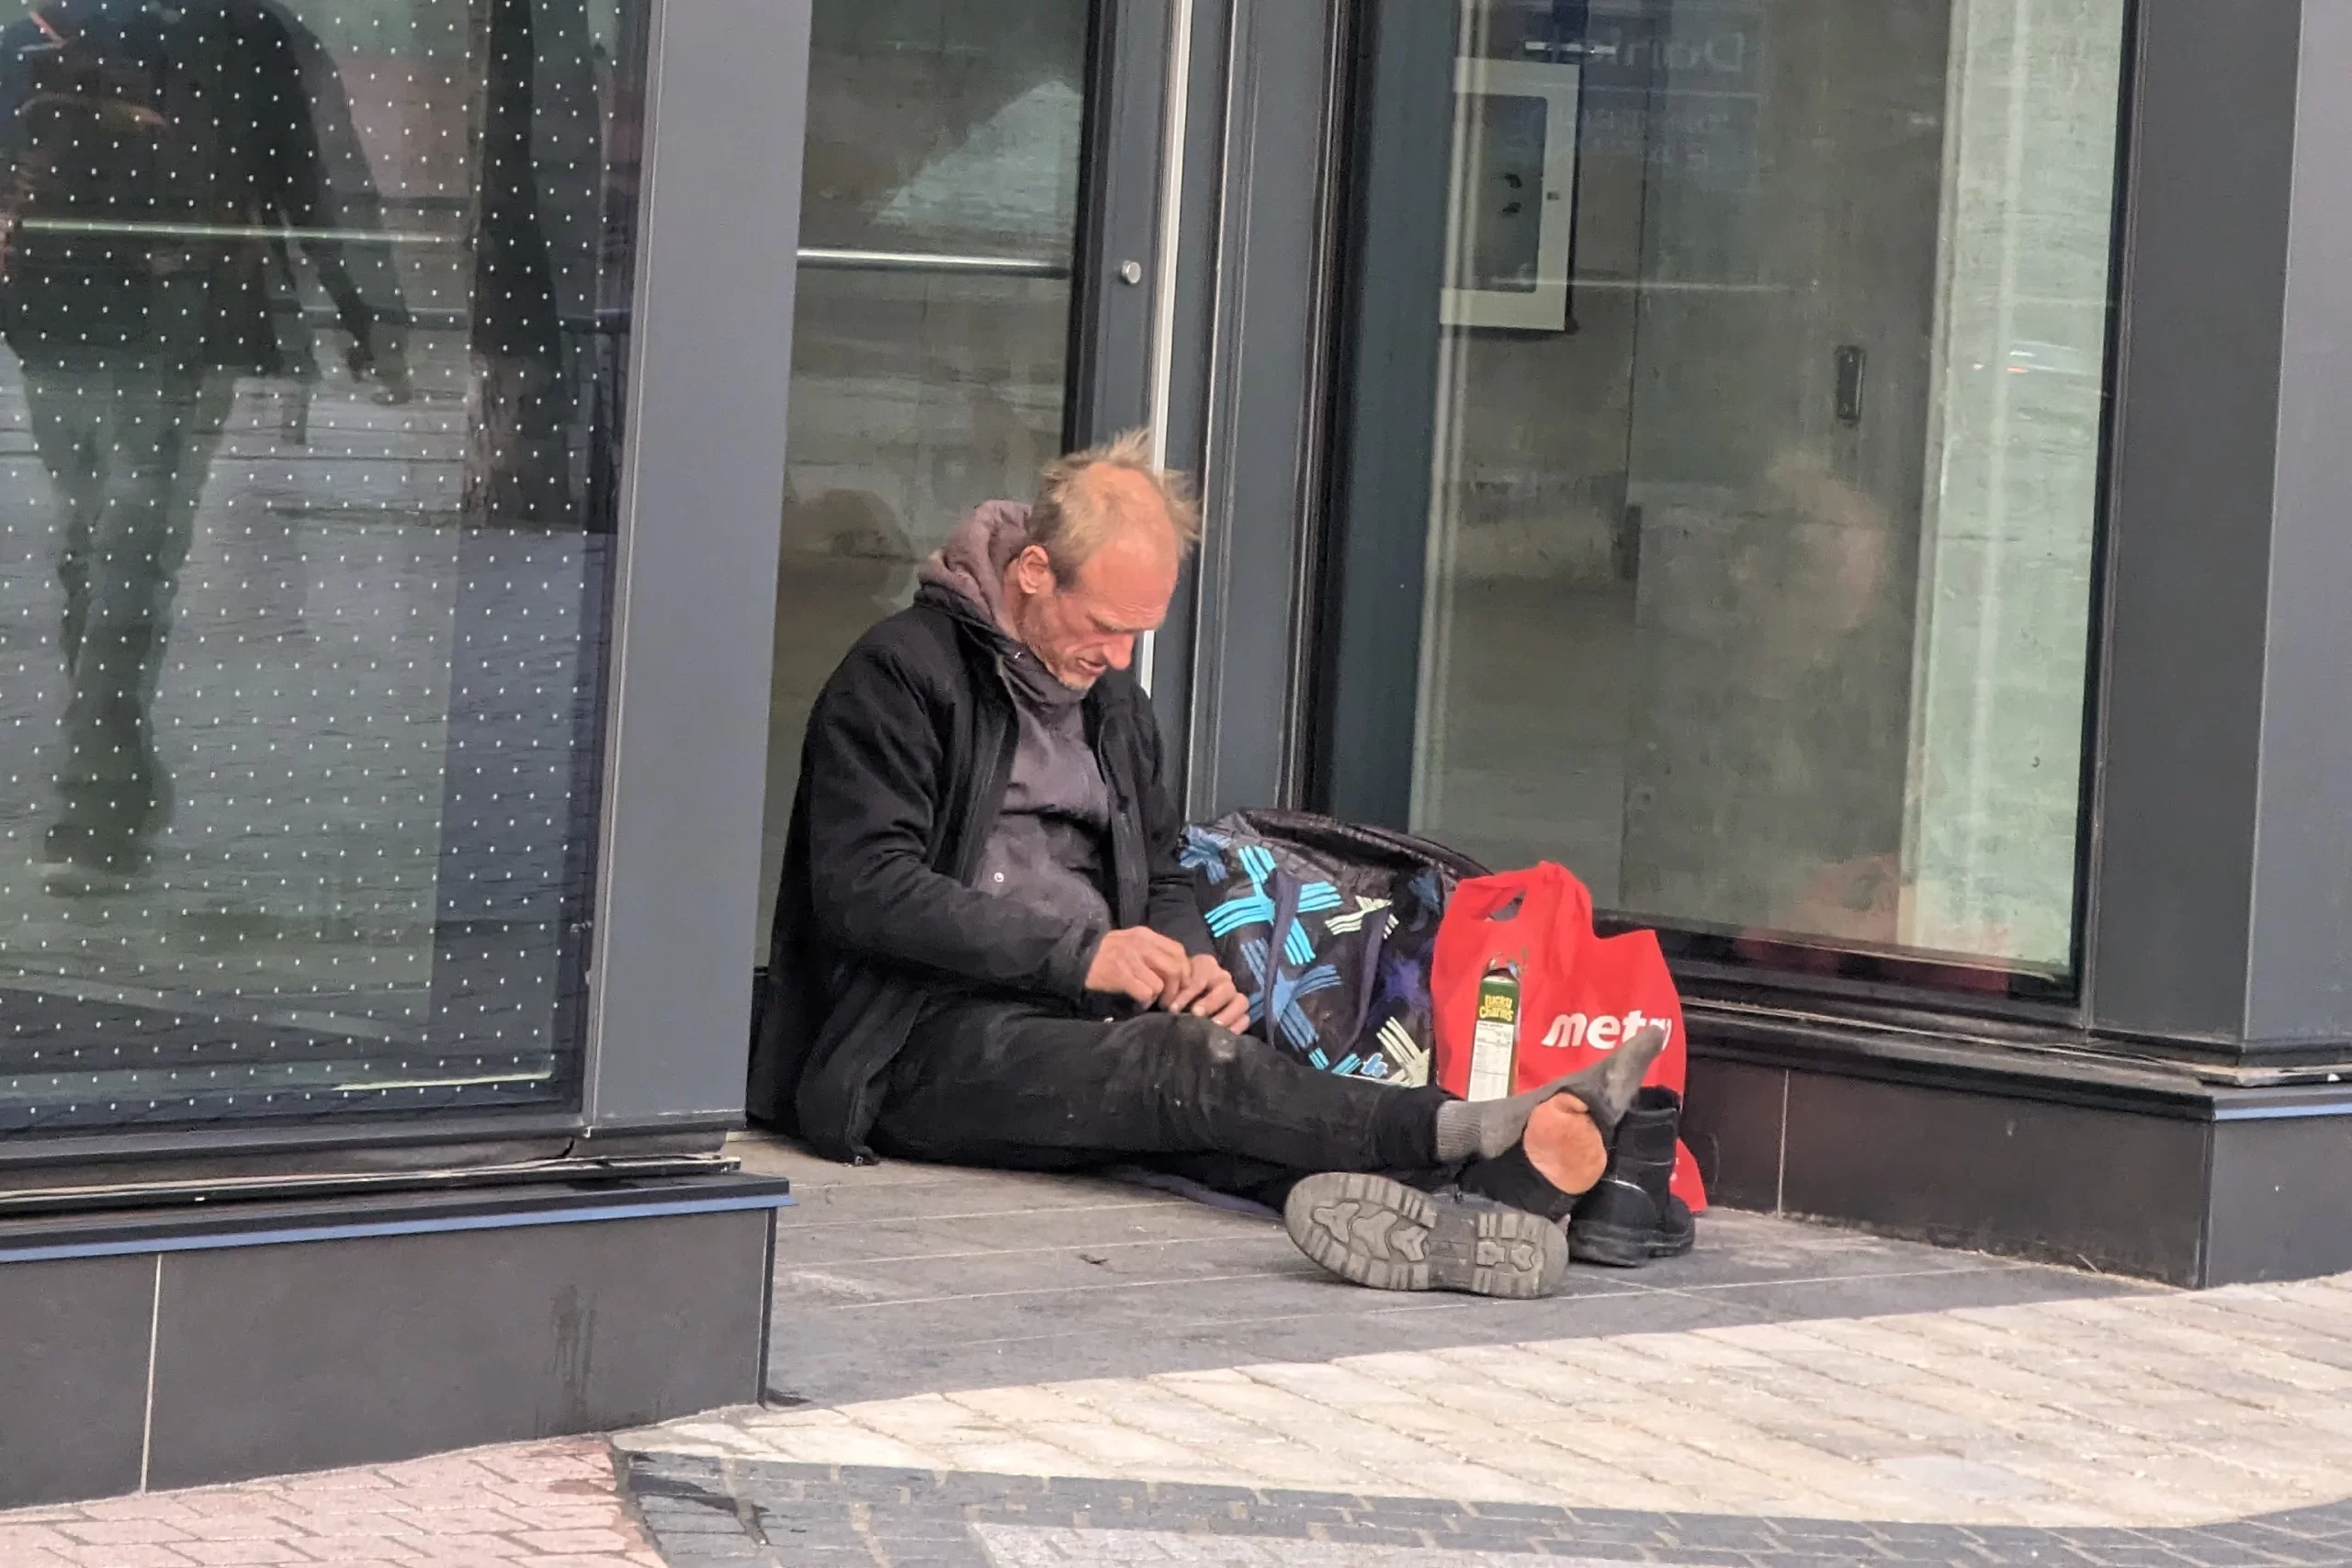 Homeless man resting in doorway in Toronto